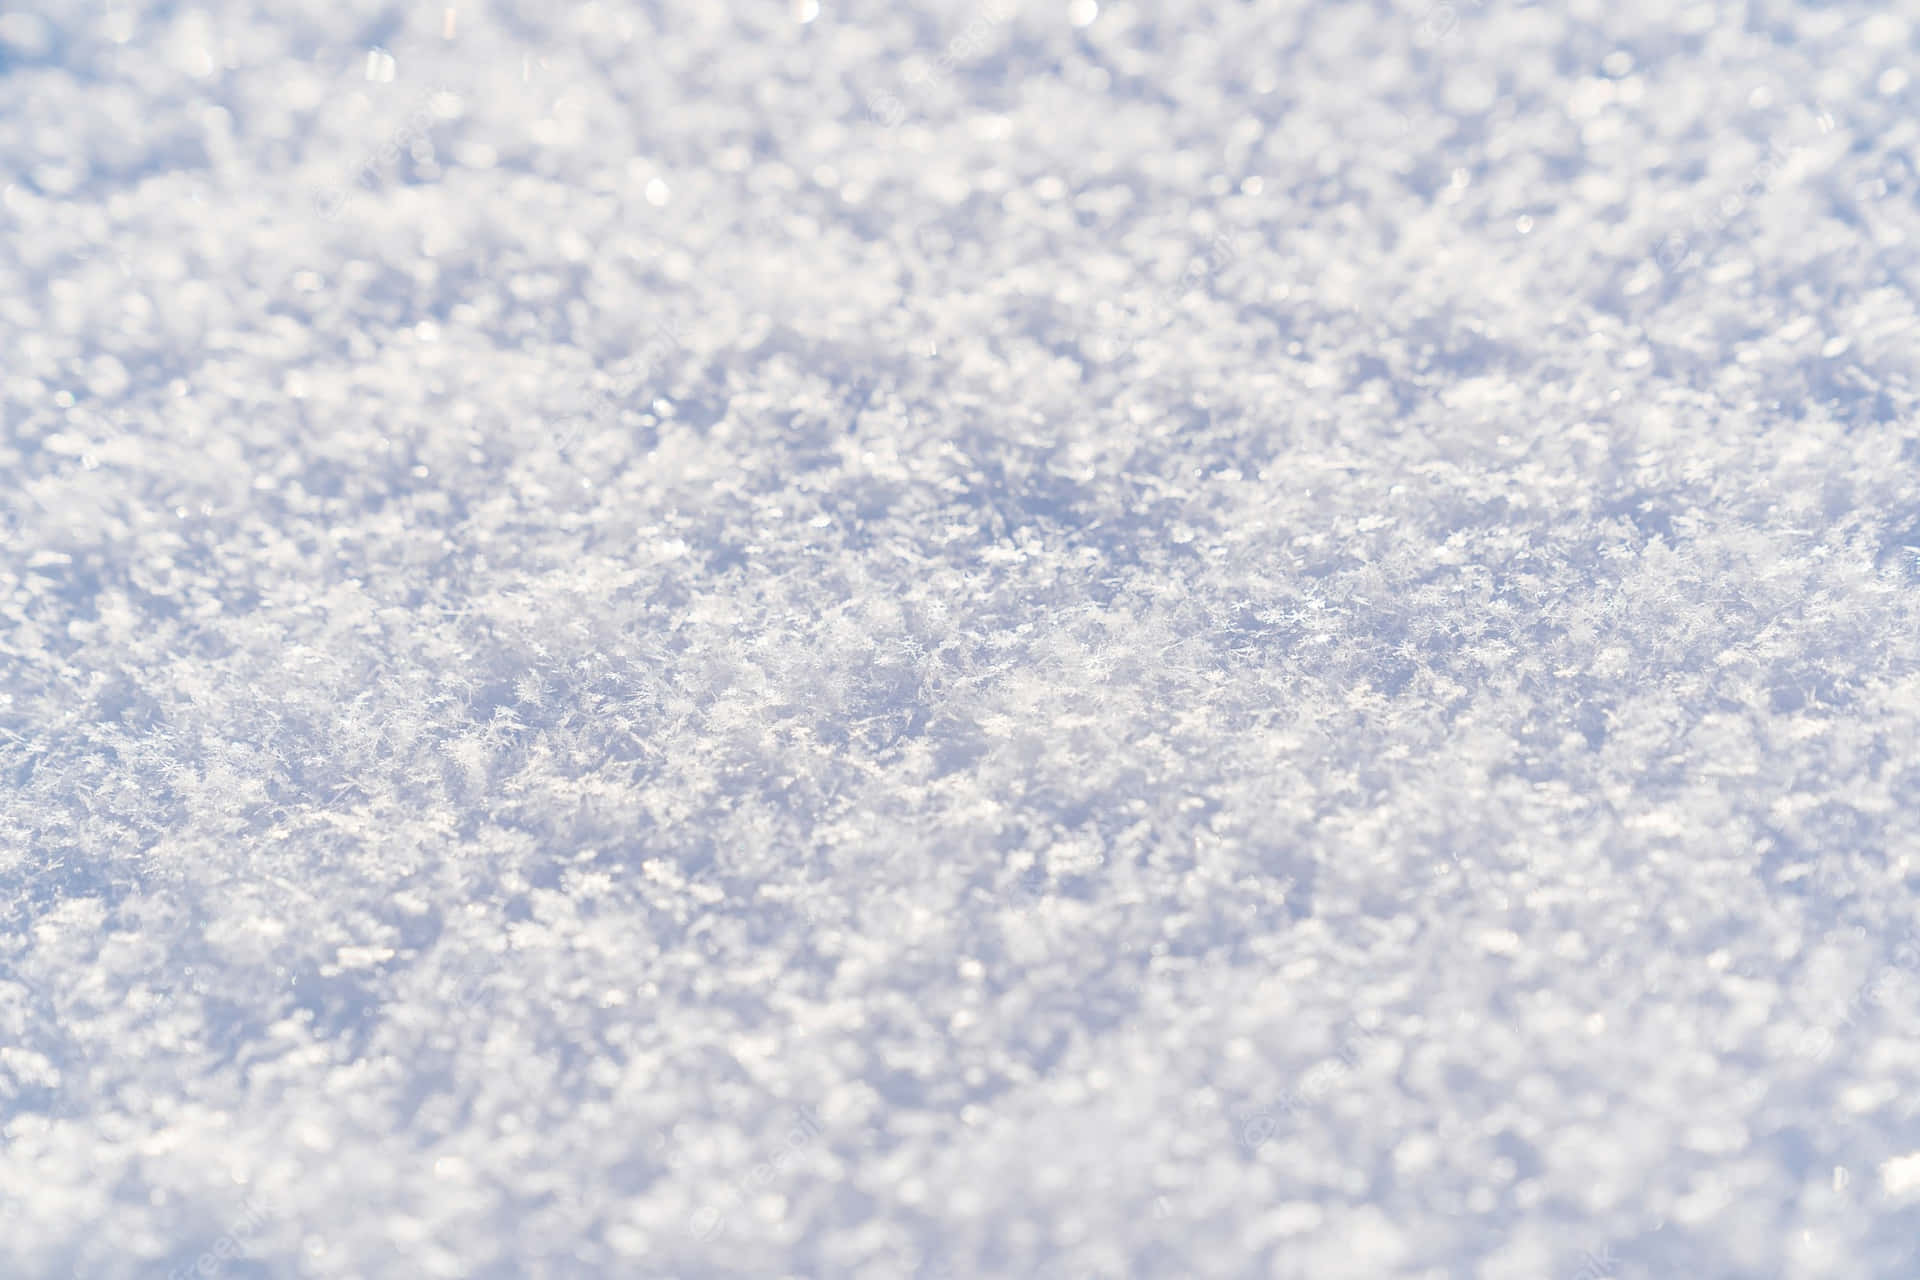 Unacoperta Di Neve Bianca Crea Una Pacifica Mattina D'inverno.